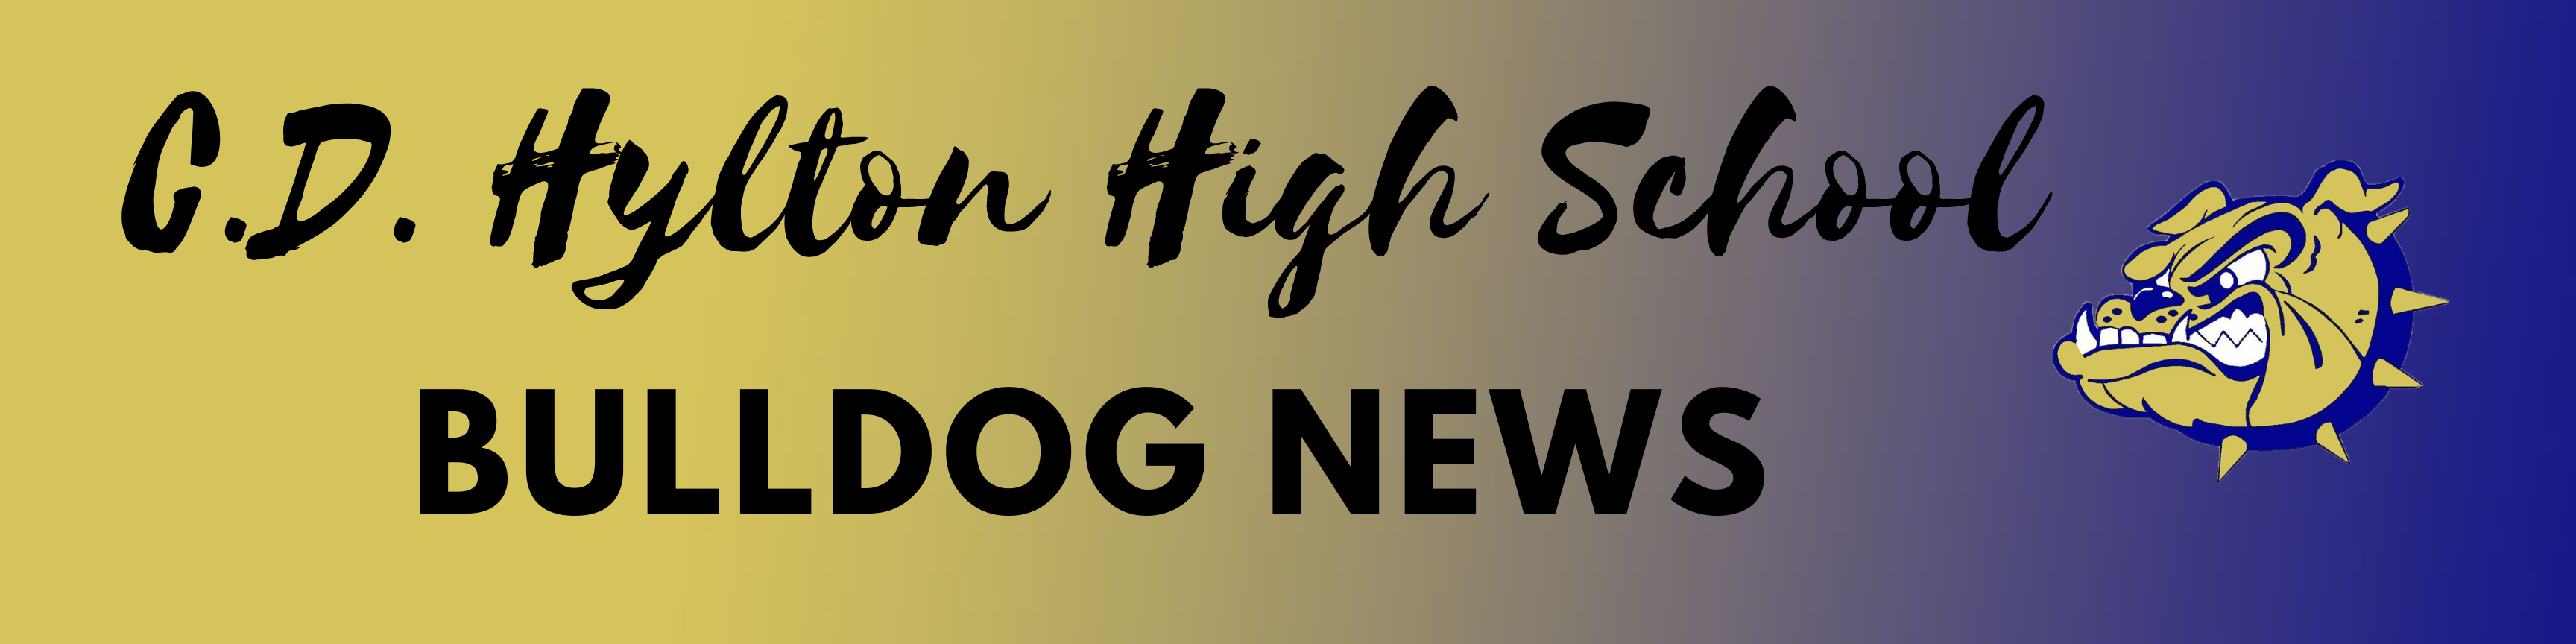 C.D. Hylton High School Bulldog News